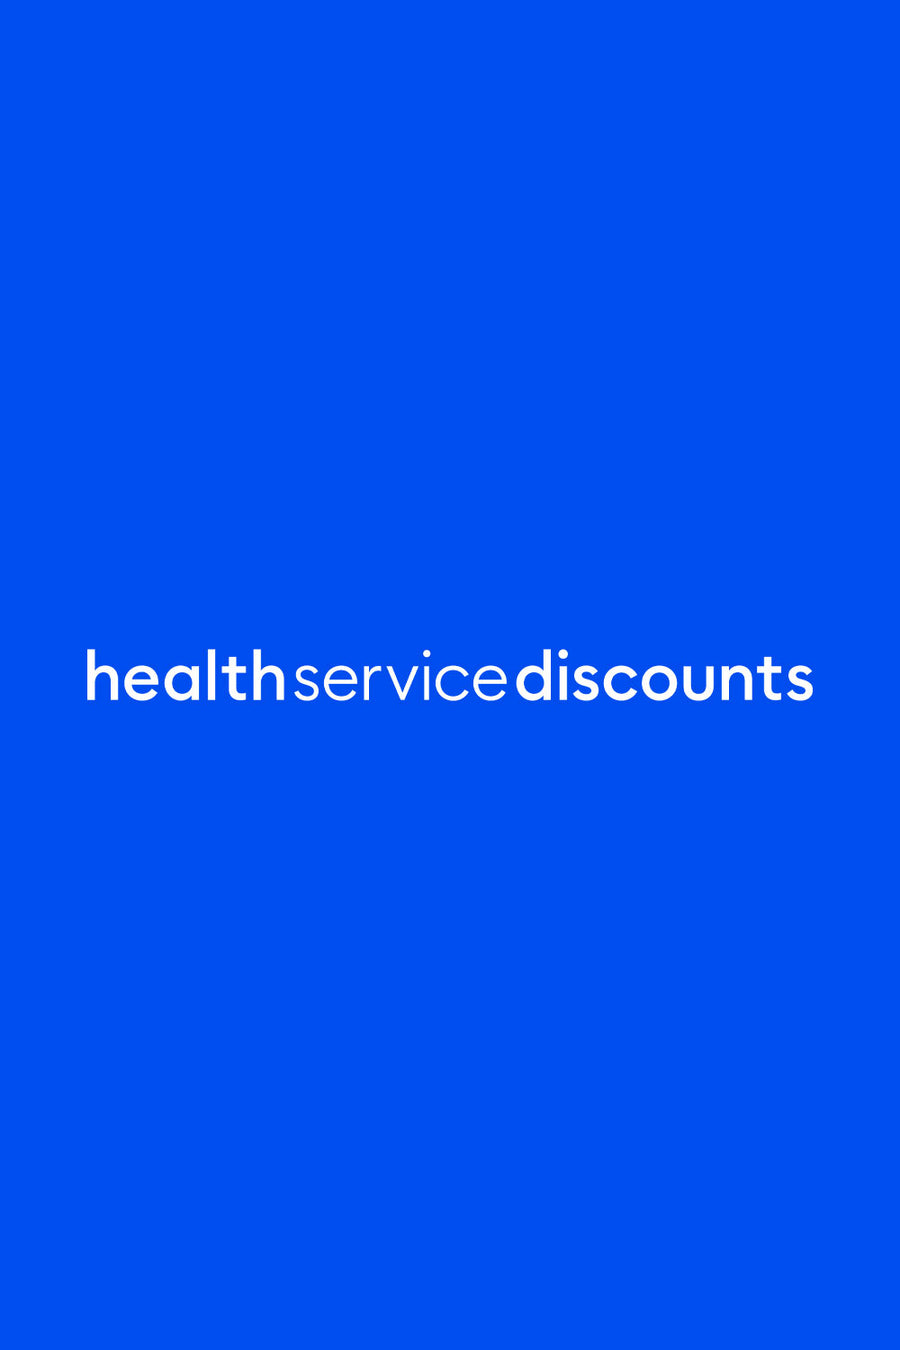 Health Service Discount logo